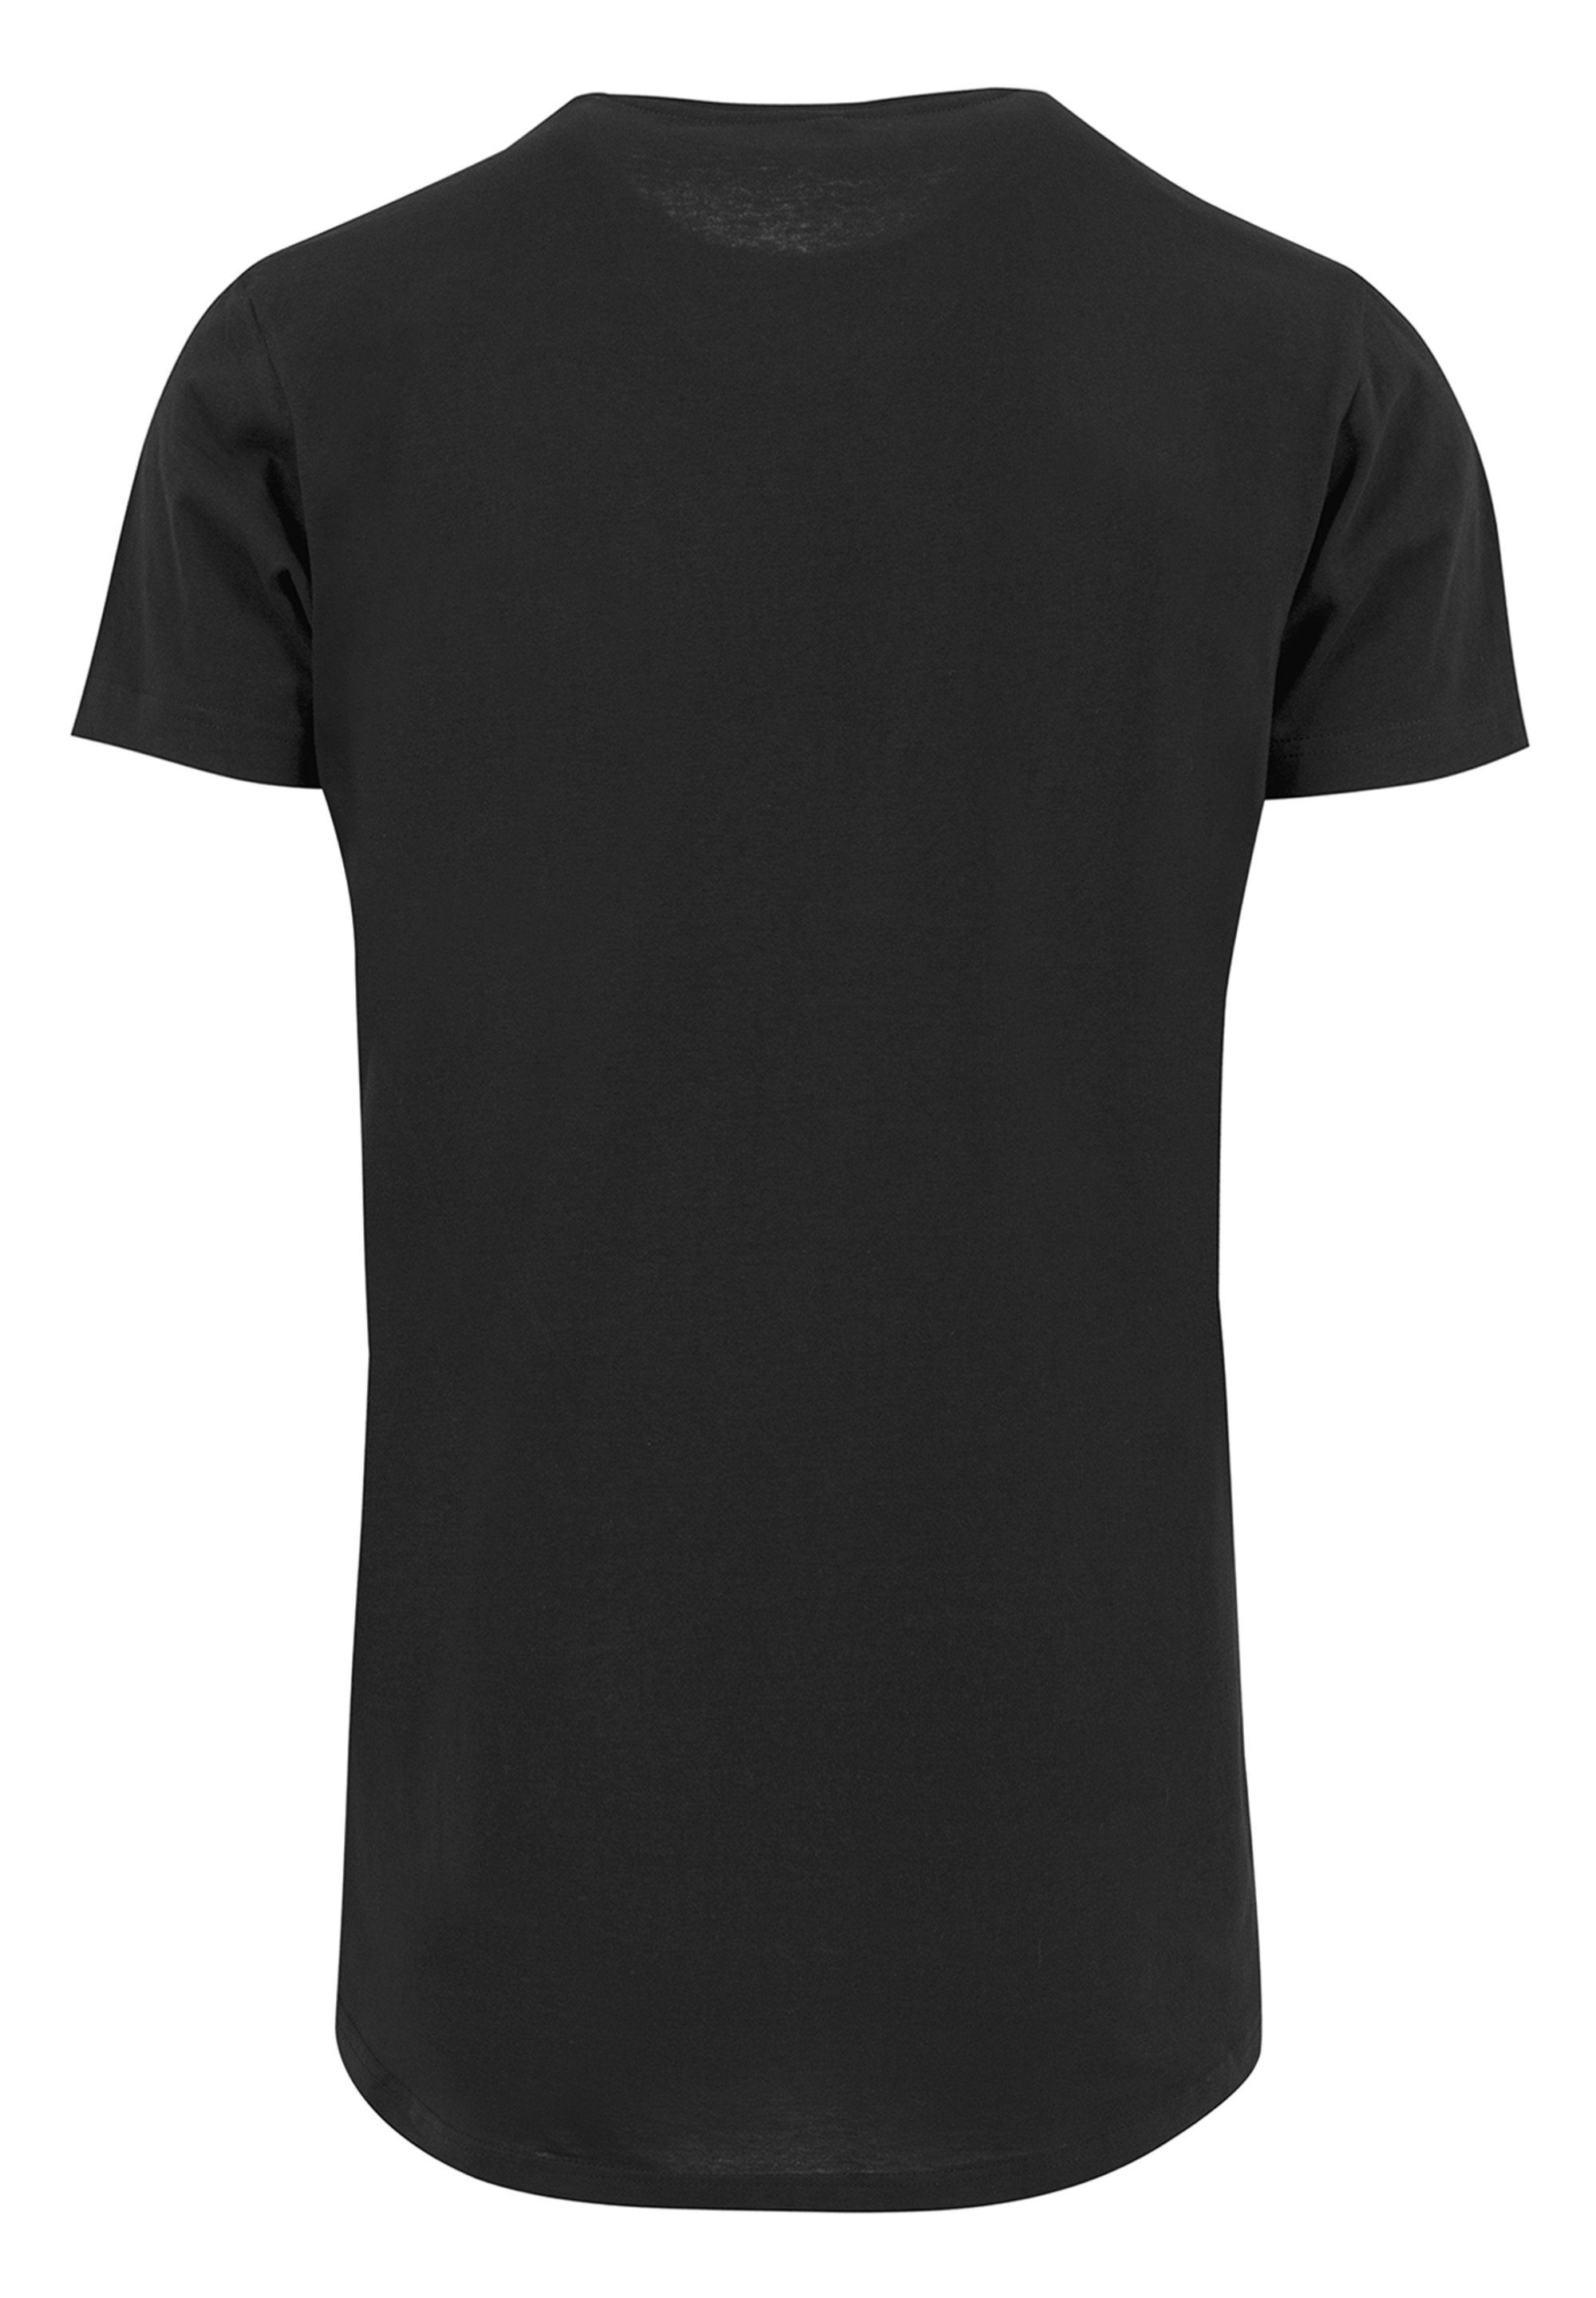 F4NT4STIC T-Shirt Queen Rockband Classic Print Crest schwarz Black